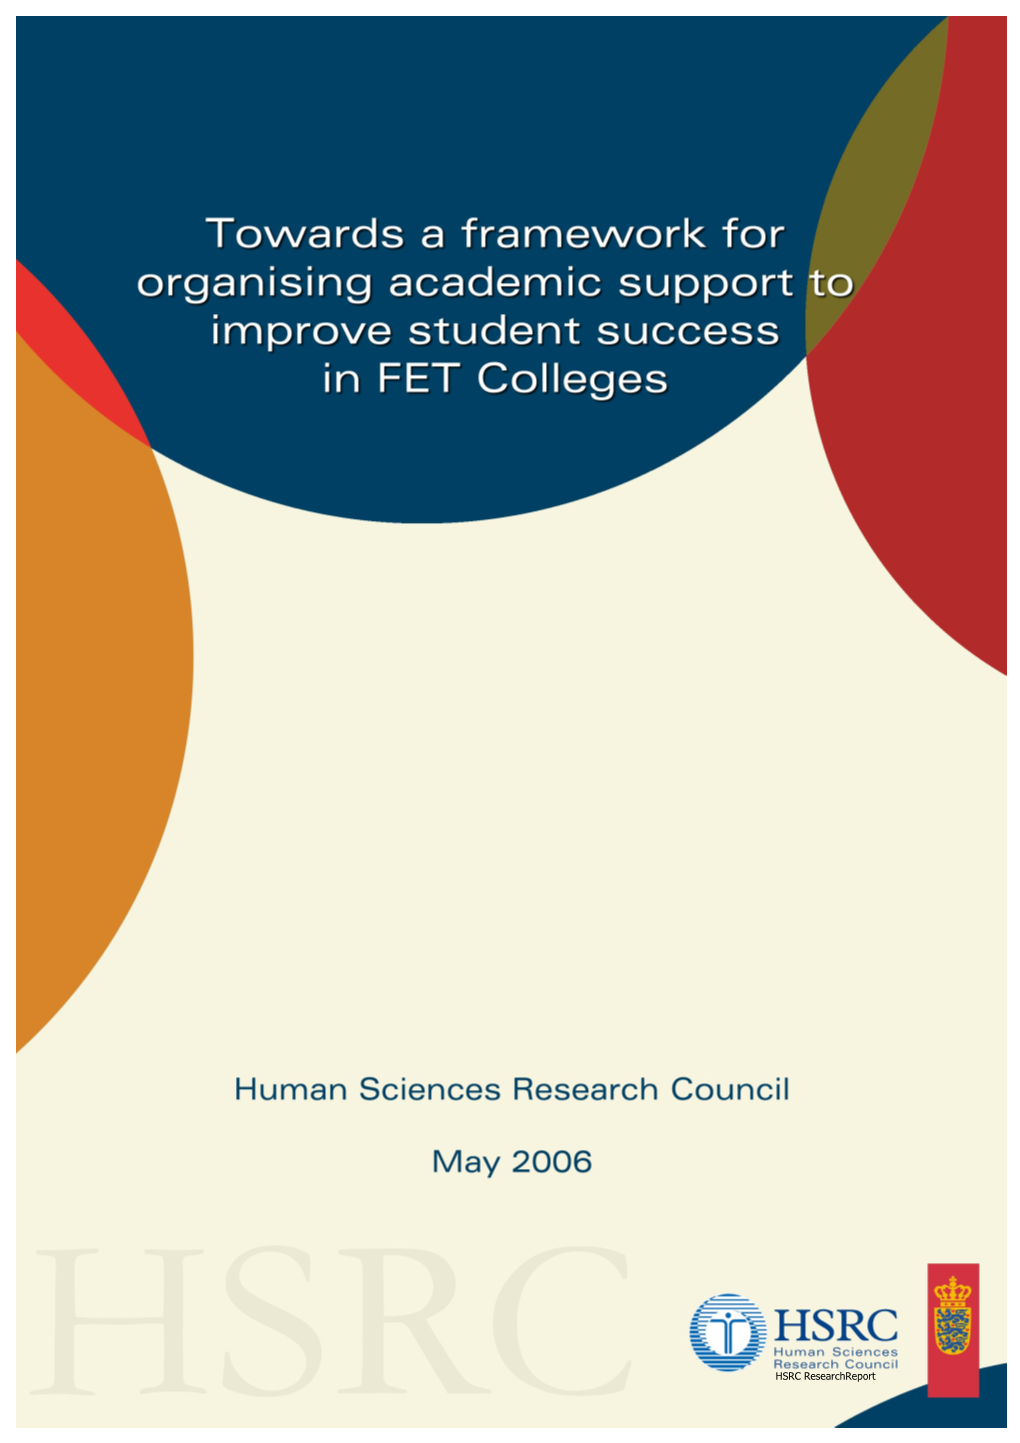 Towards a Framework for Organising